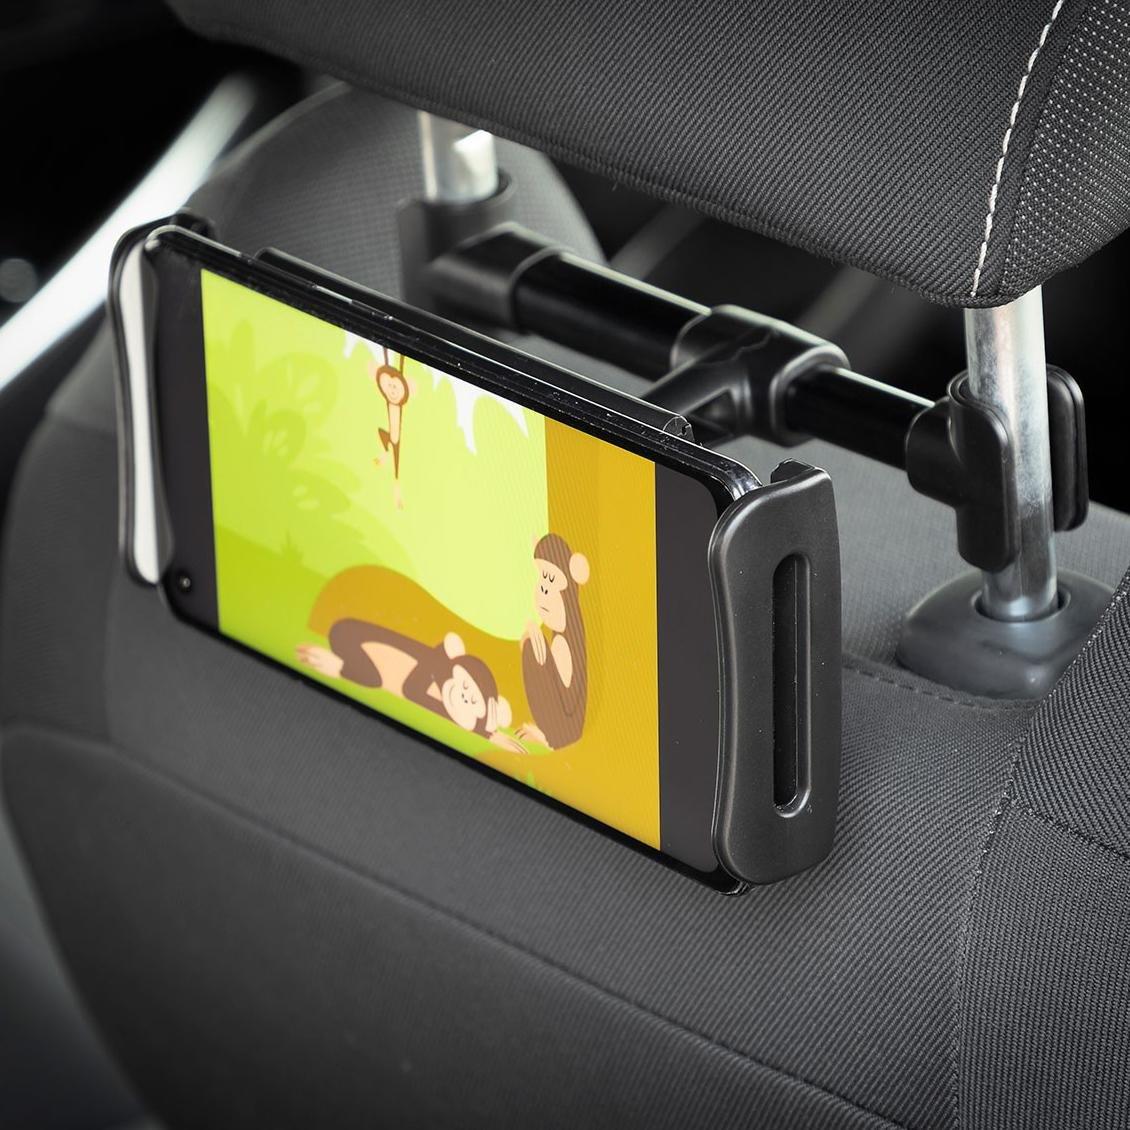 InnovaGoods  Support pour tablette et smartphone pour voiture 